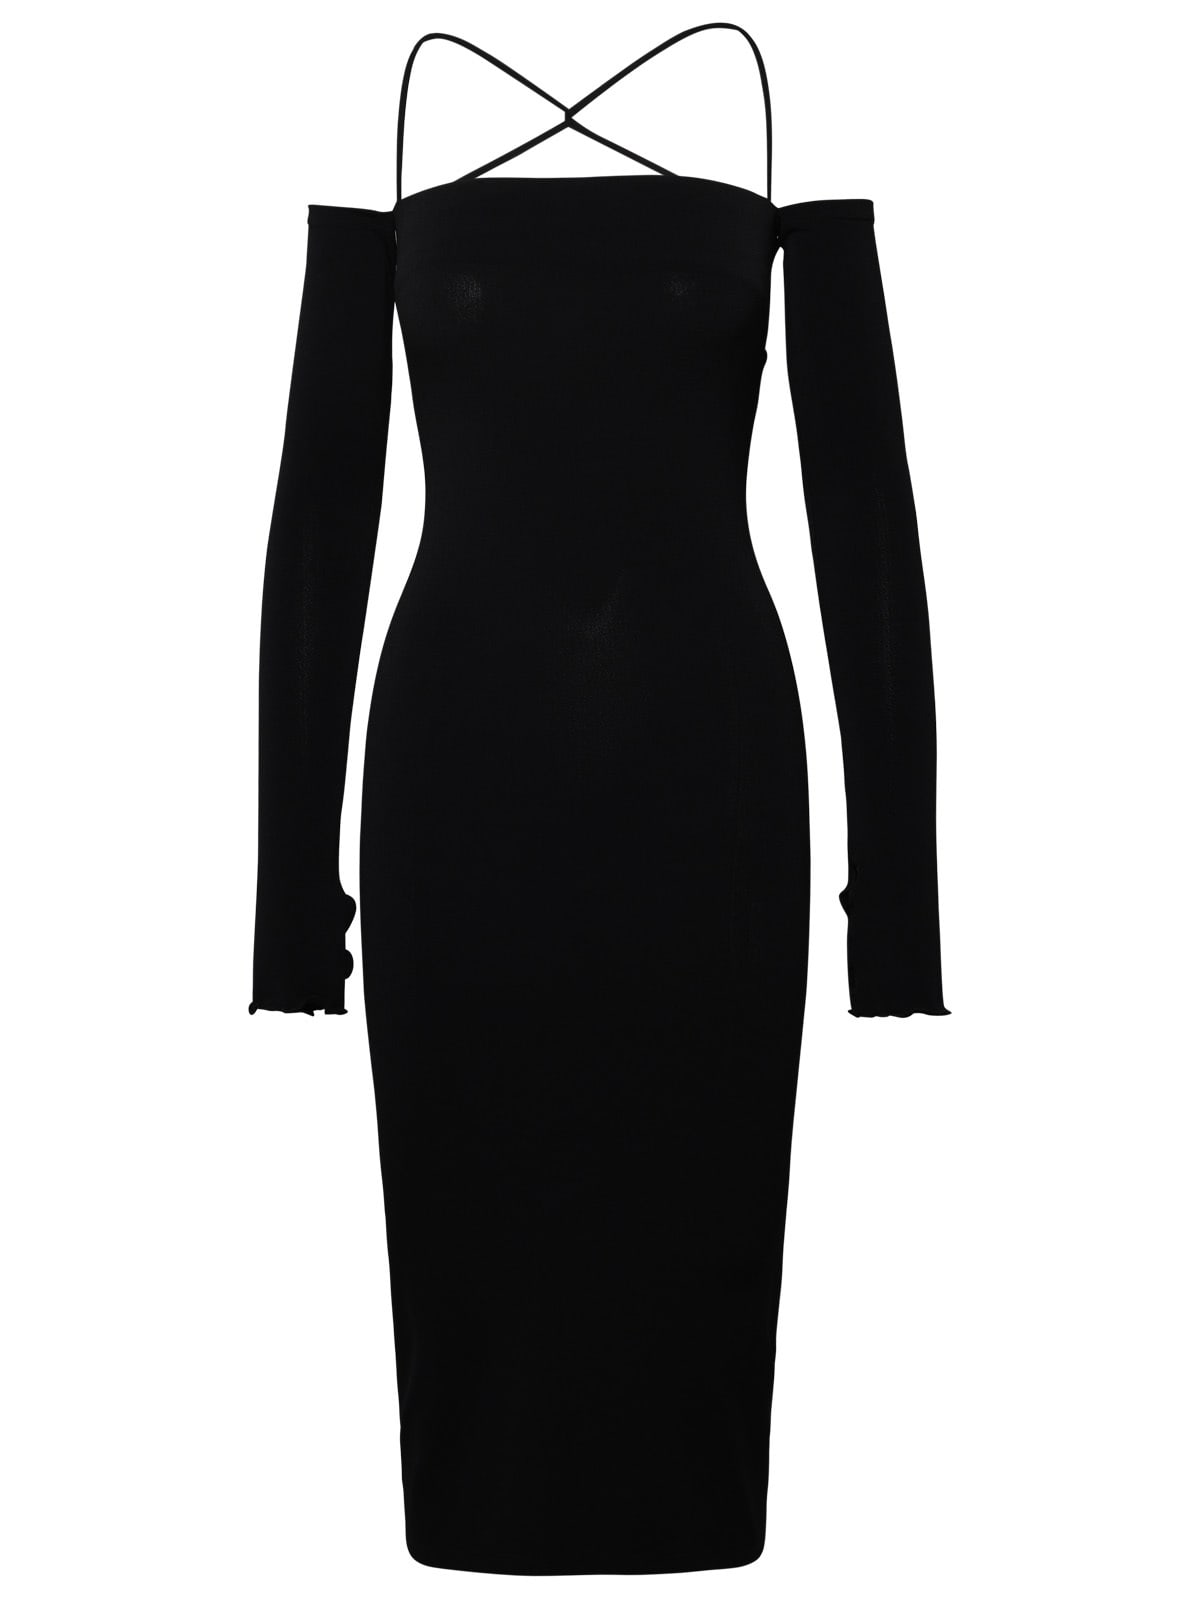 Maddy Black Polyester Dress